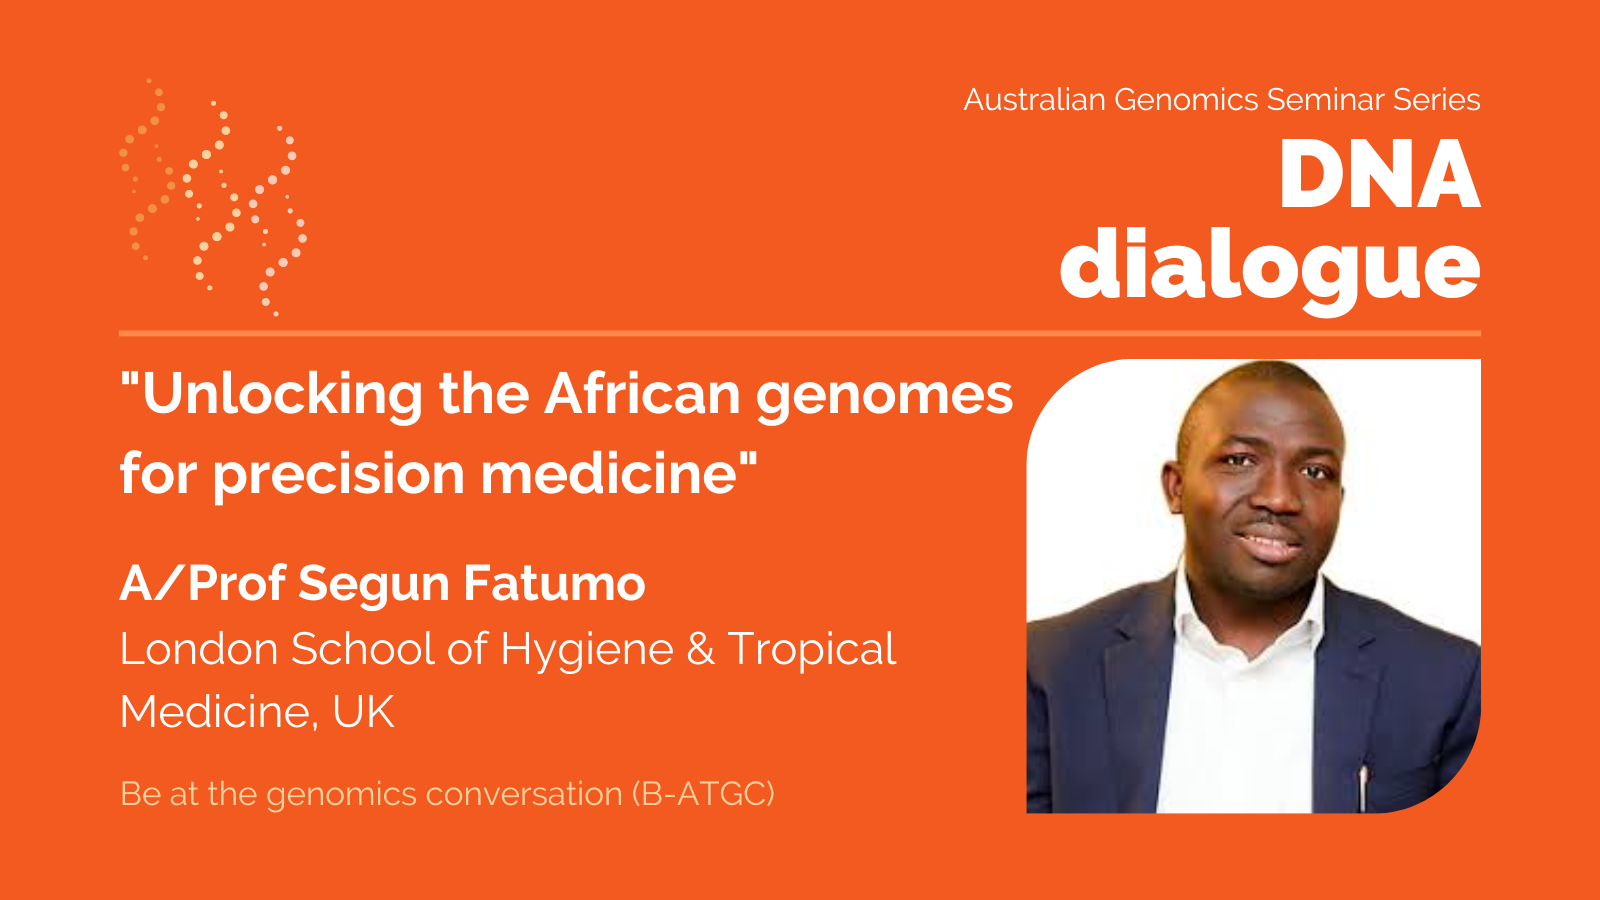 DNA dialogue seminar "Unlocking the African genomes for precision medicine" with A/Prof Segun Fatumo on Thursday 28 September 2023.